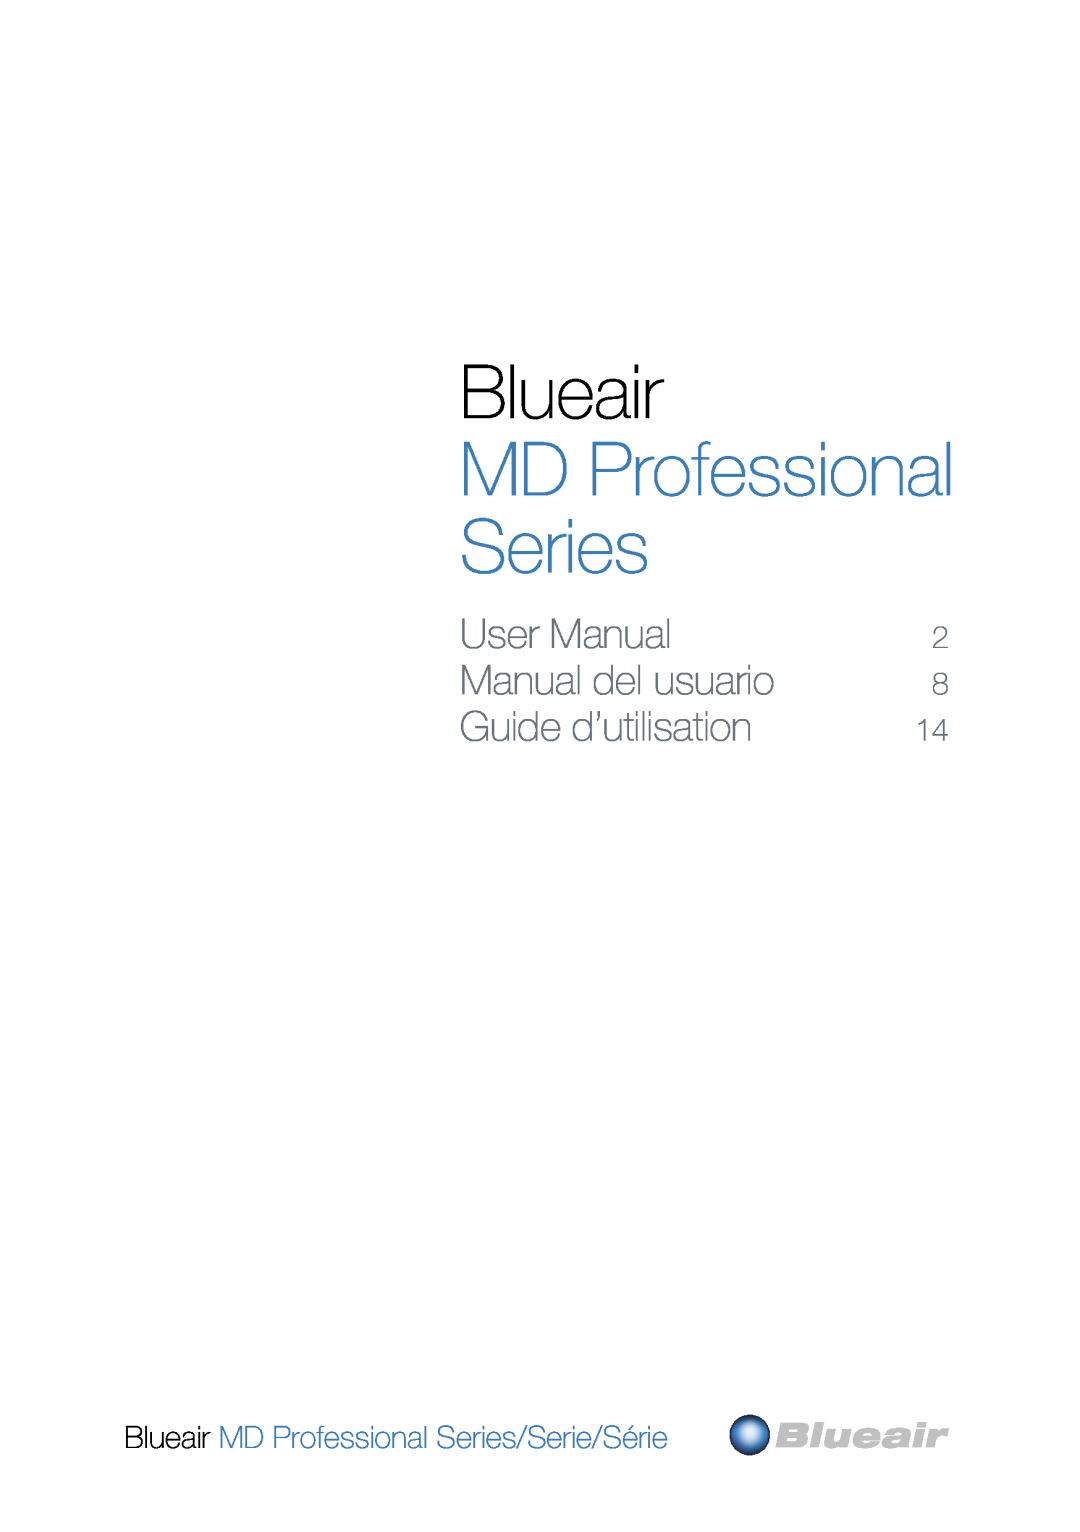 Blueair user manual Blueair MD Professional Series/Serie/Série 